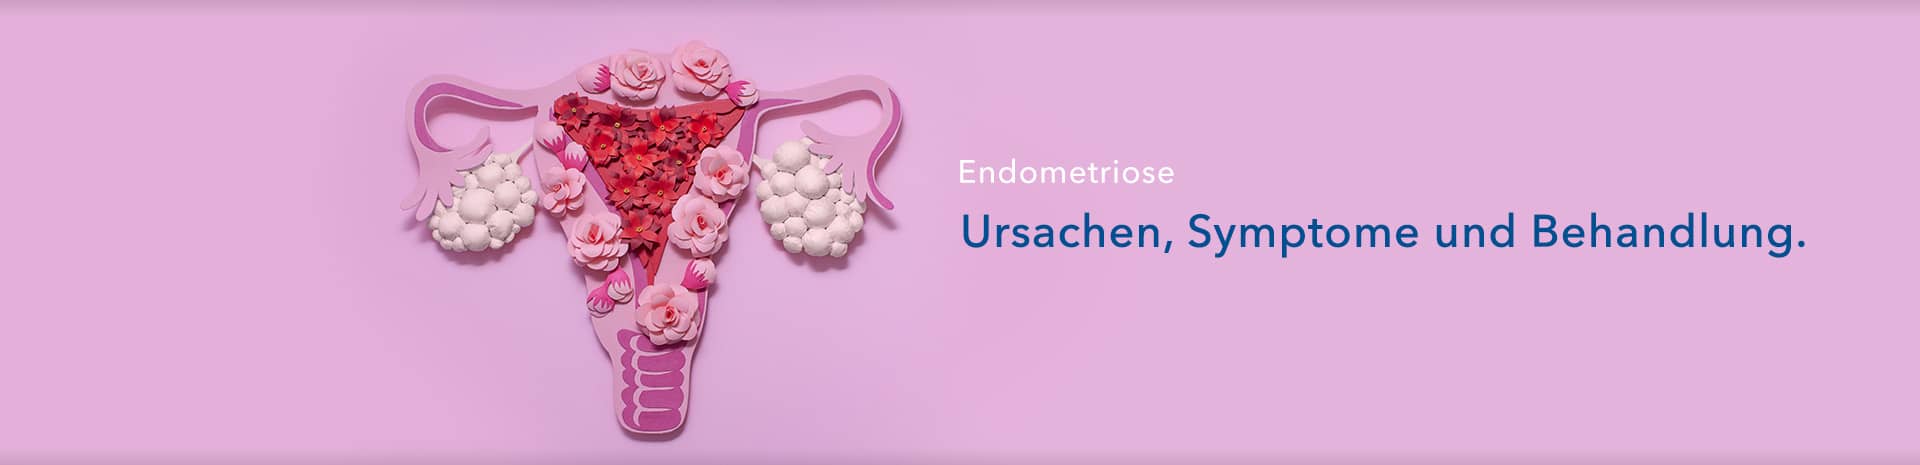 Ratgeber zu Endometriose